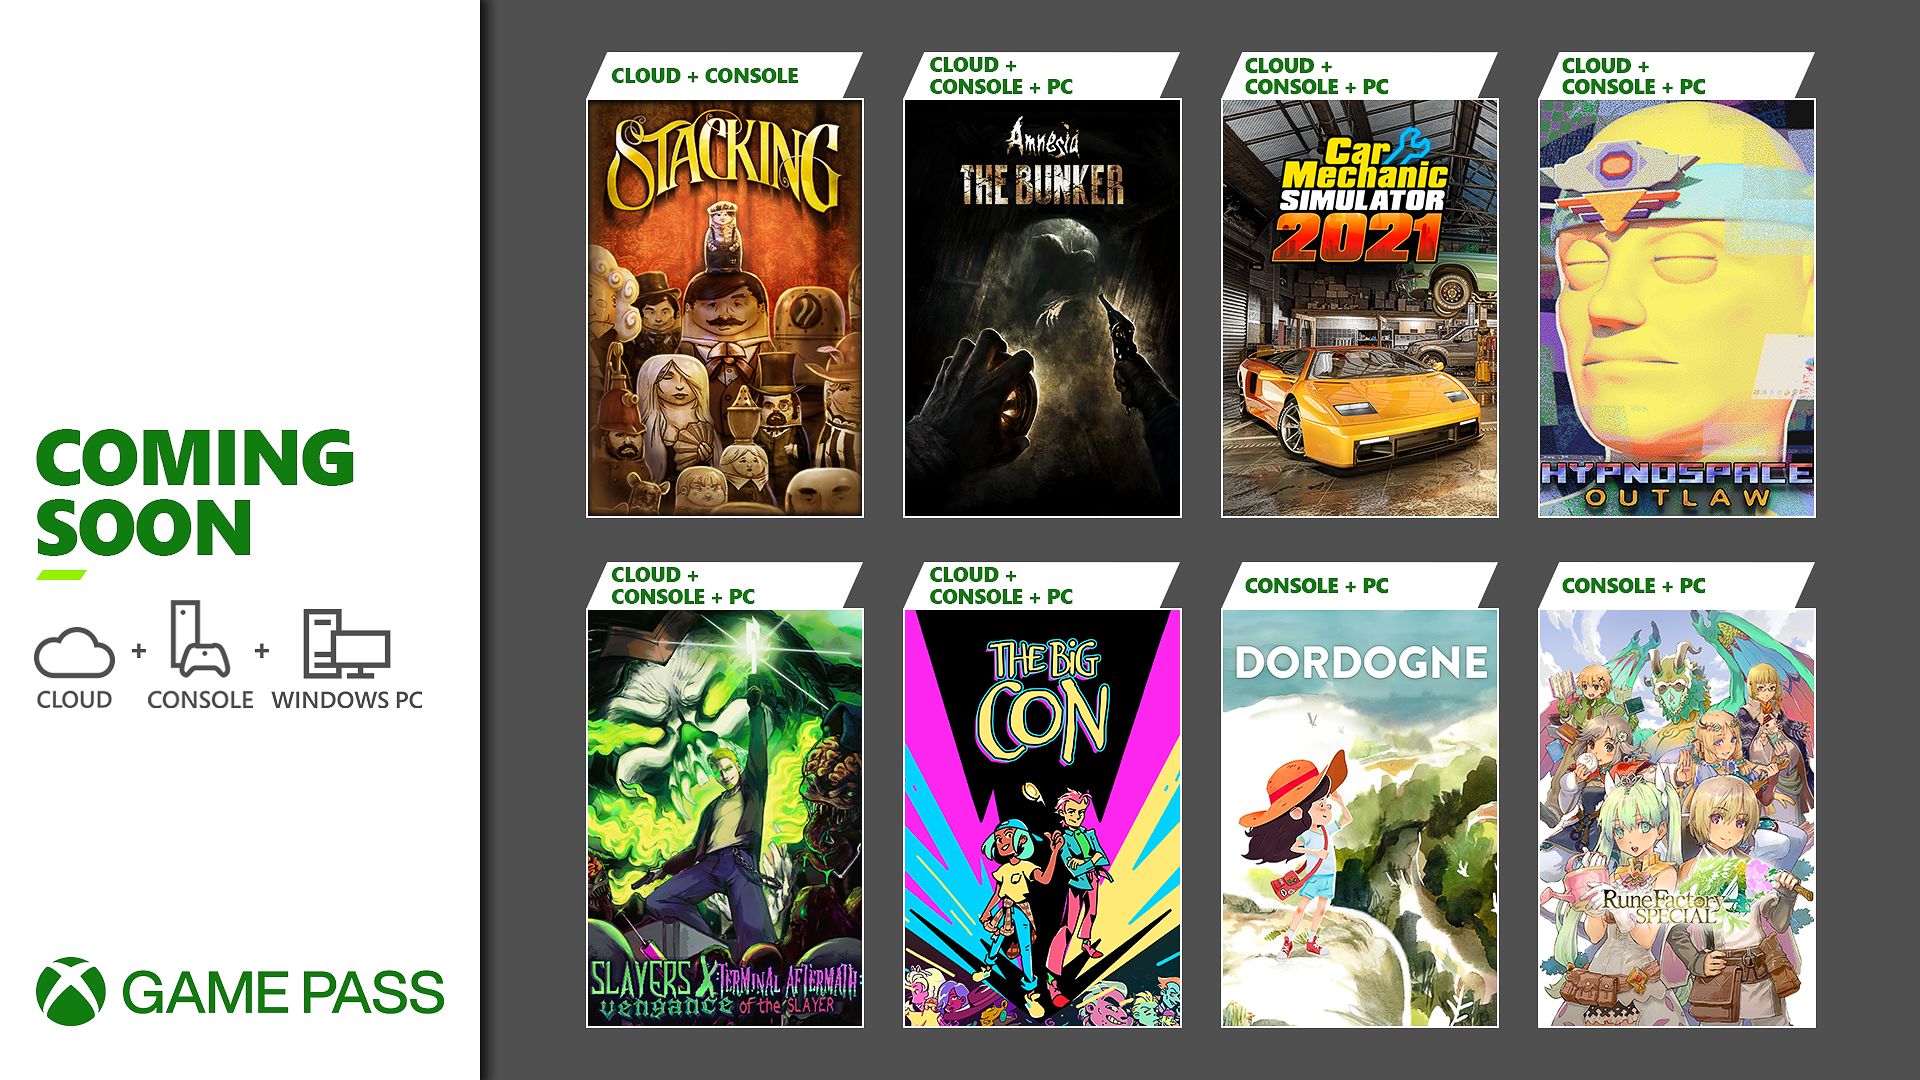 Bald im Xbox Game Pass: Amnesia: The Bunker, Car Mechanic Simulator 2021, Dordogne und mehr : HERO